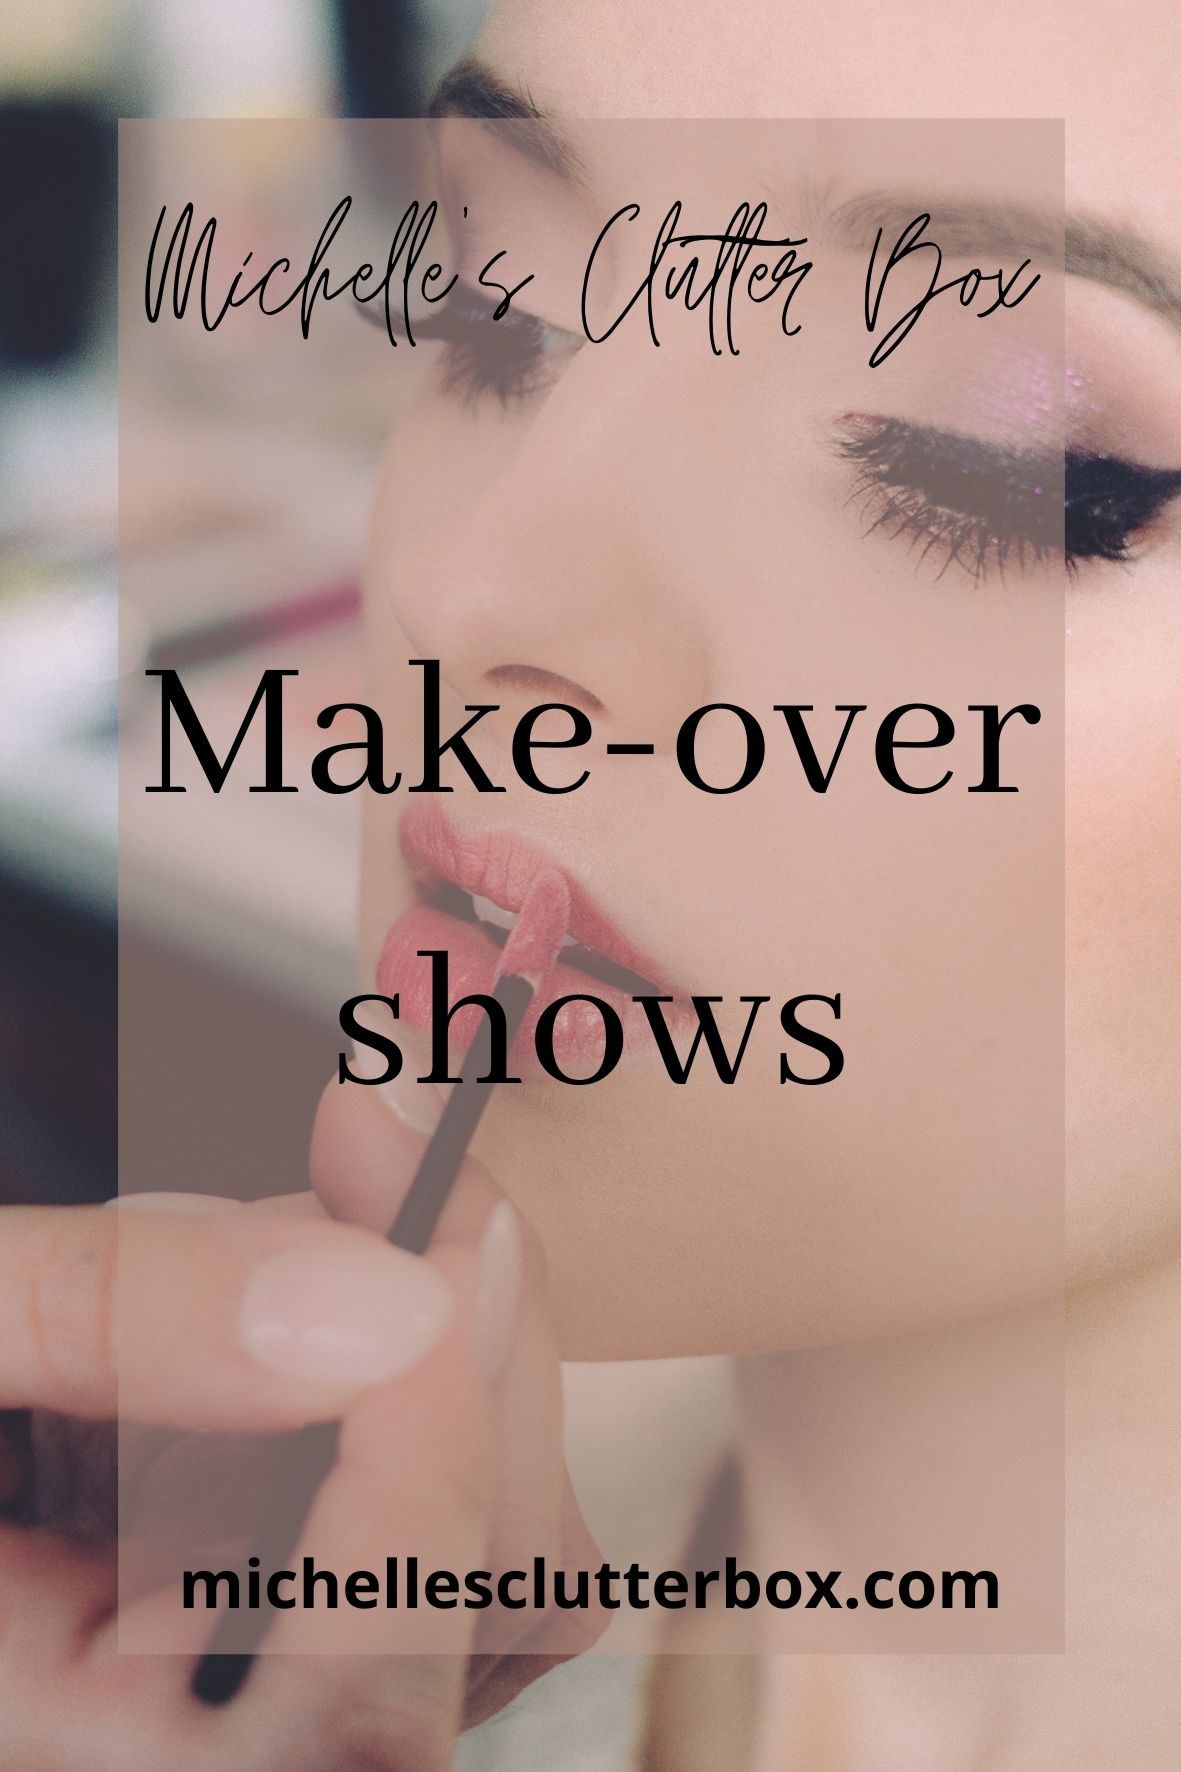 Make-over shows